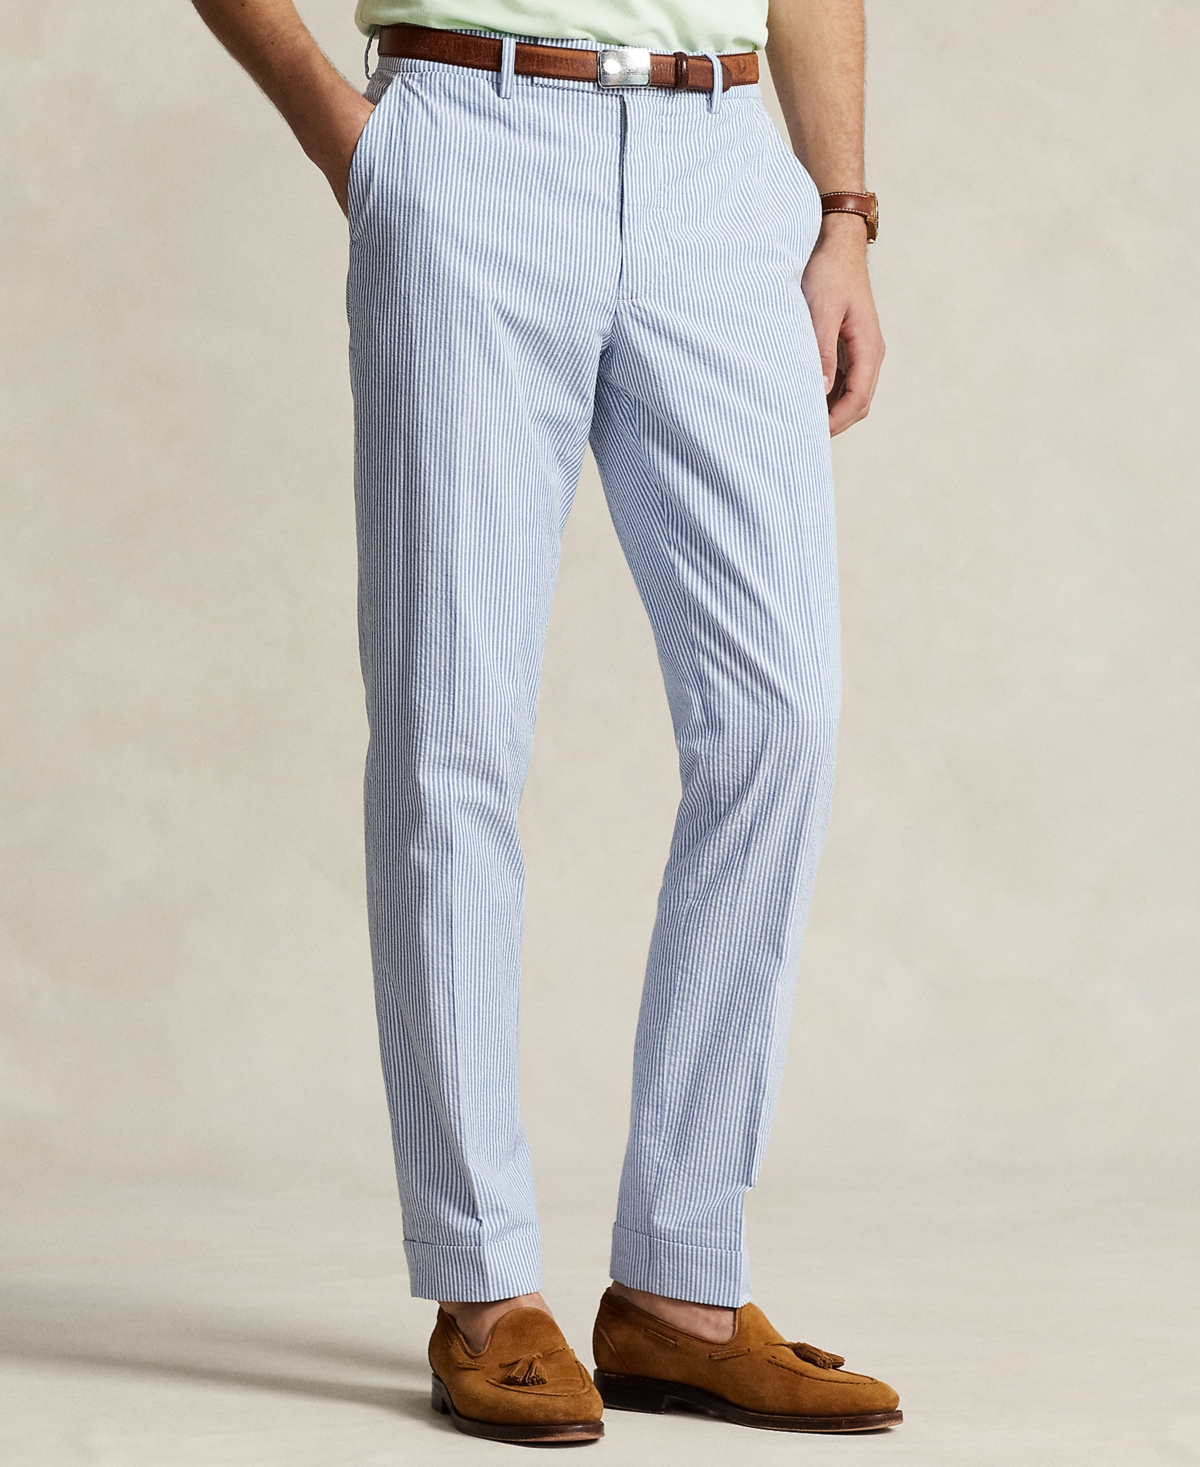 Men's Seersucker Pants - Bright Blue/white